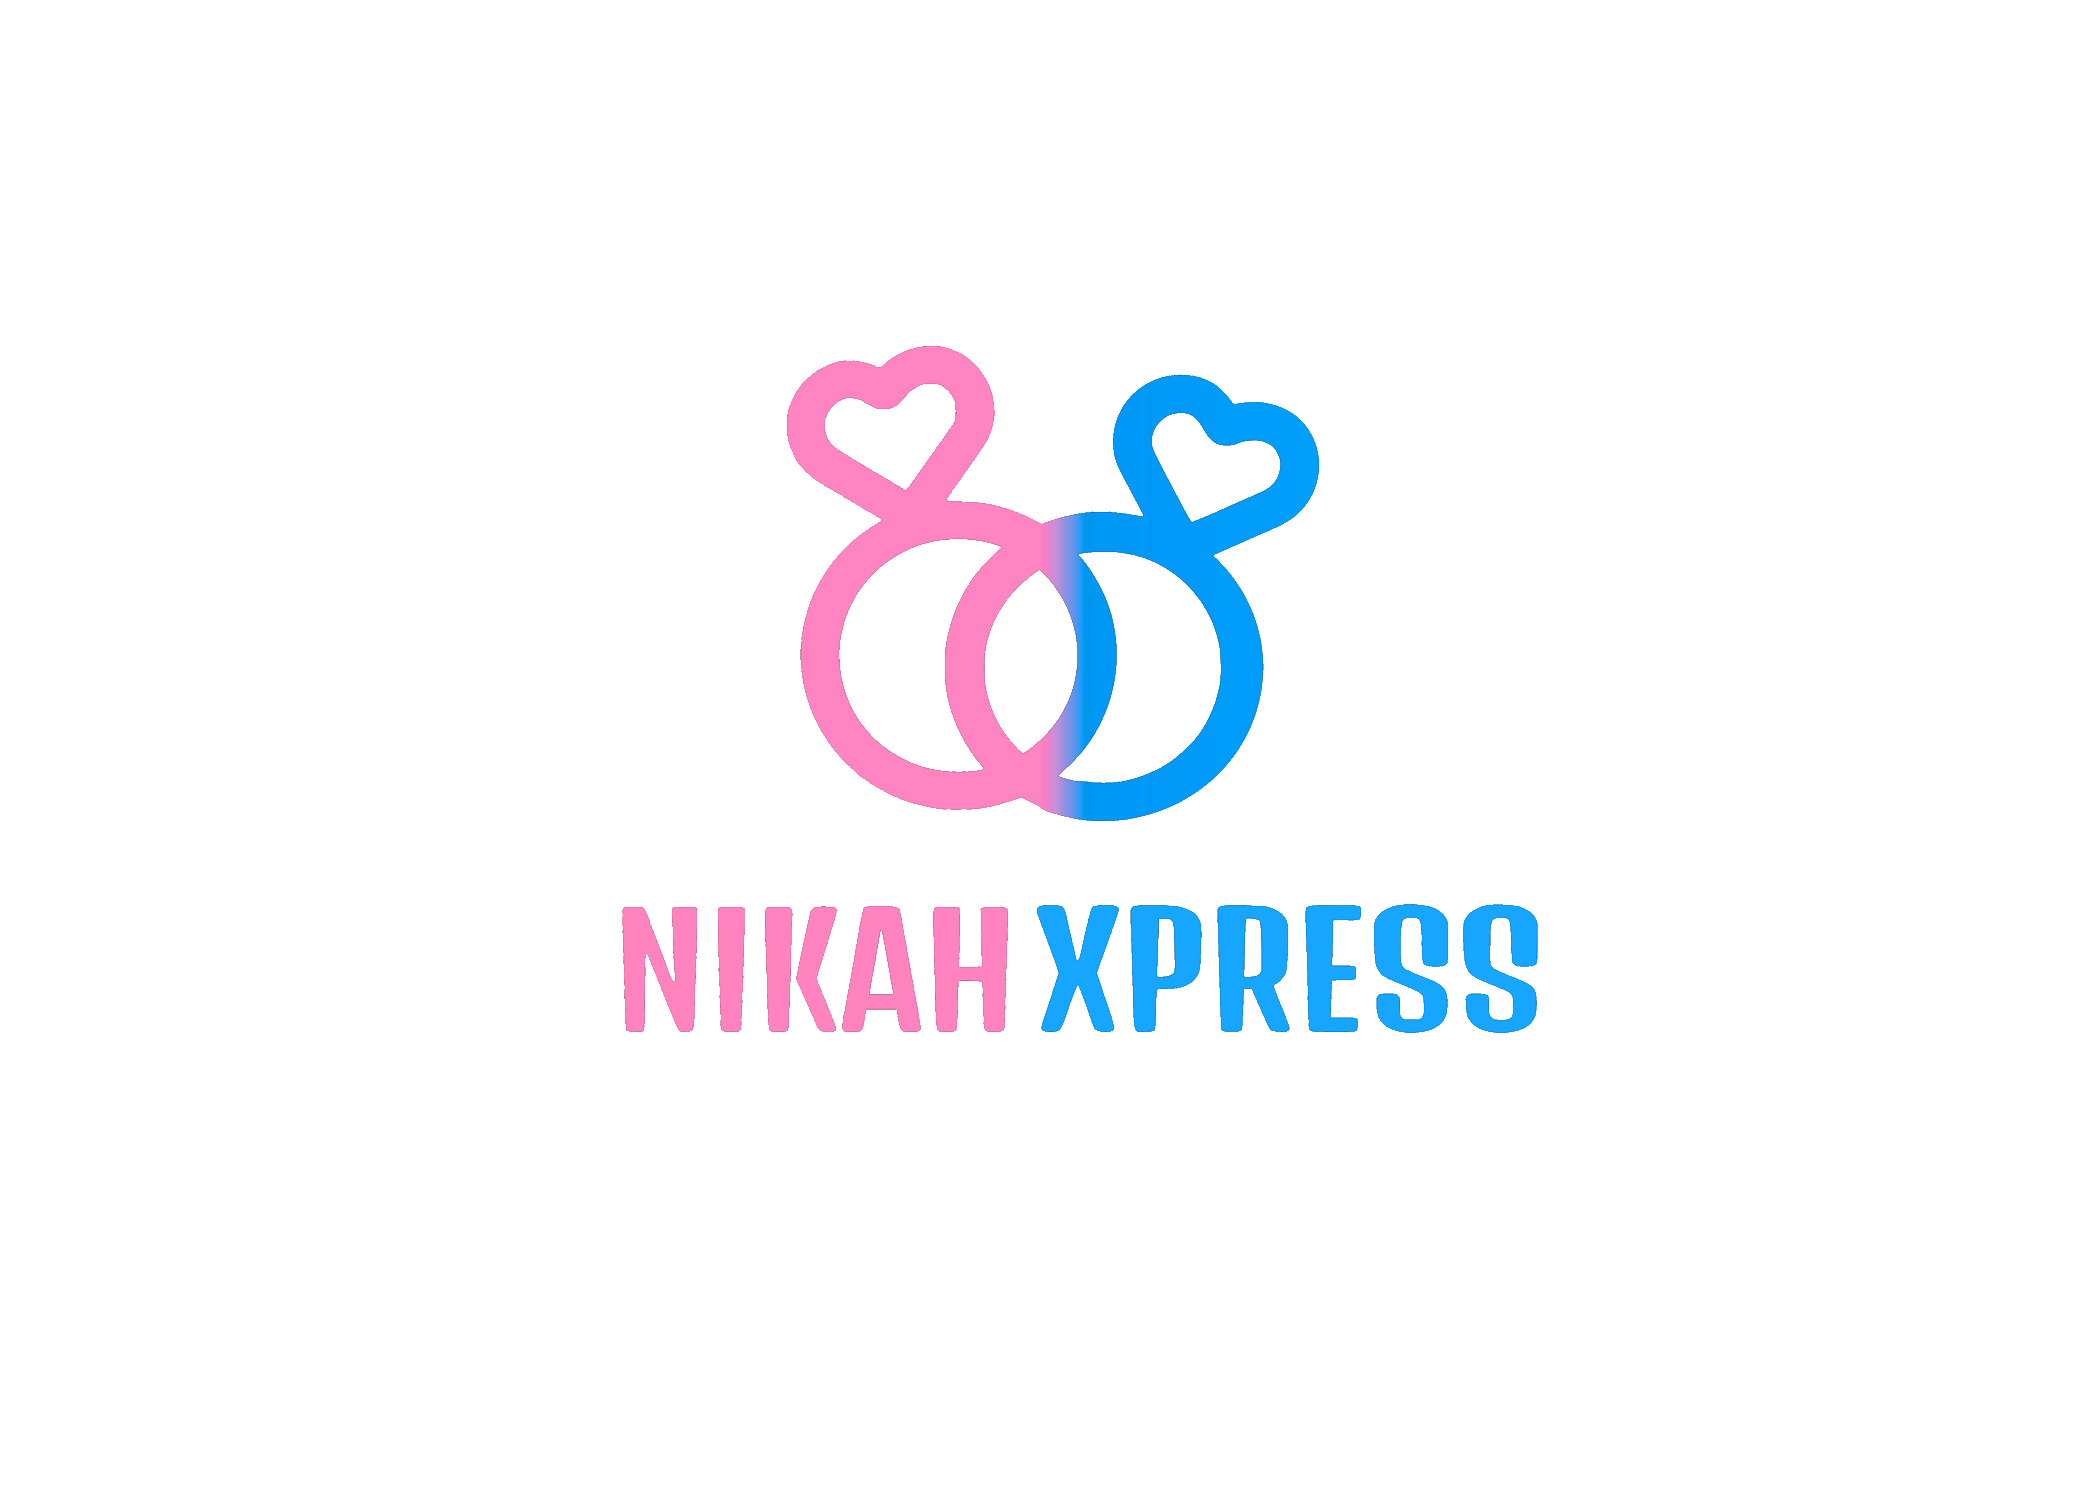 NikahXpress